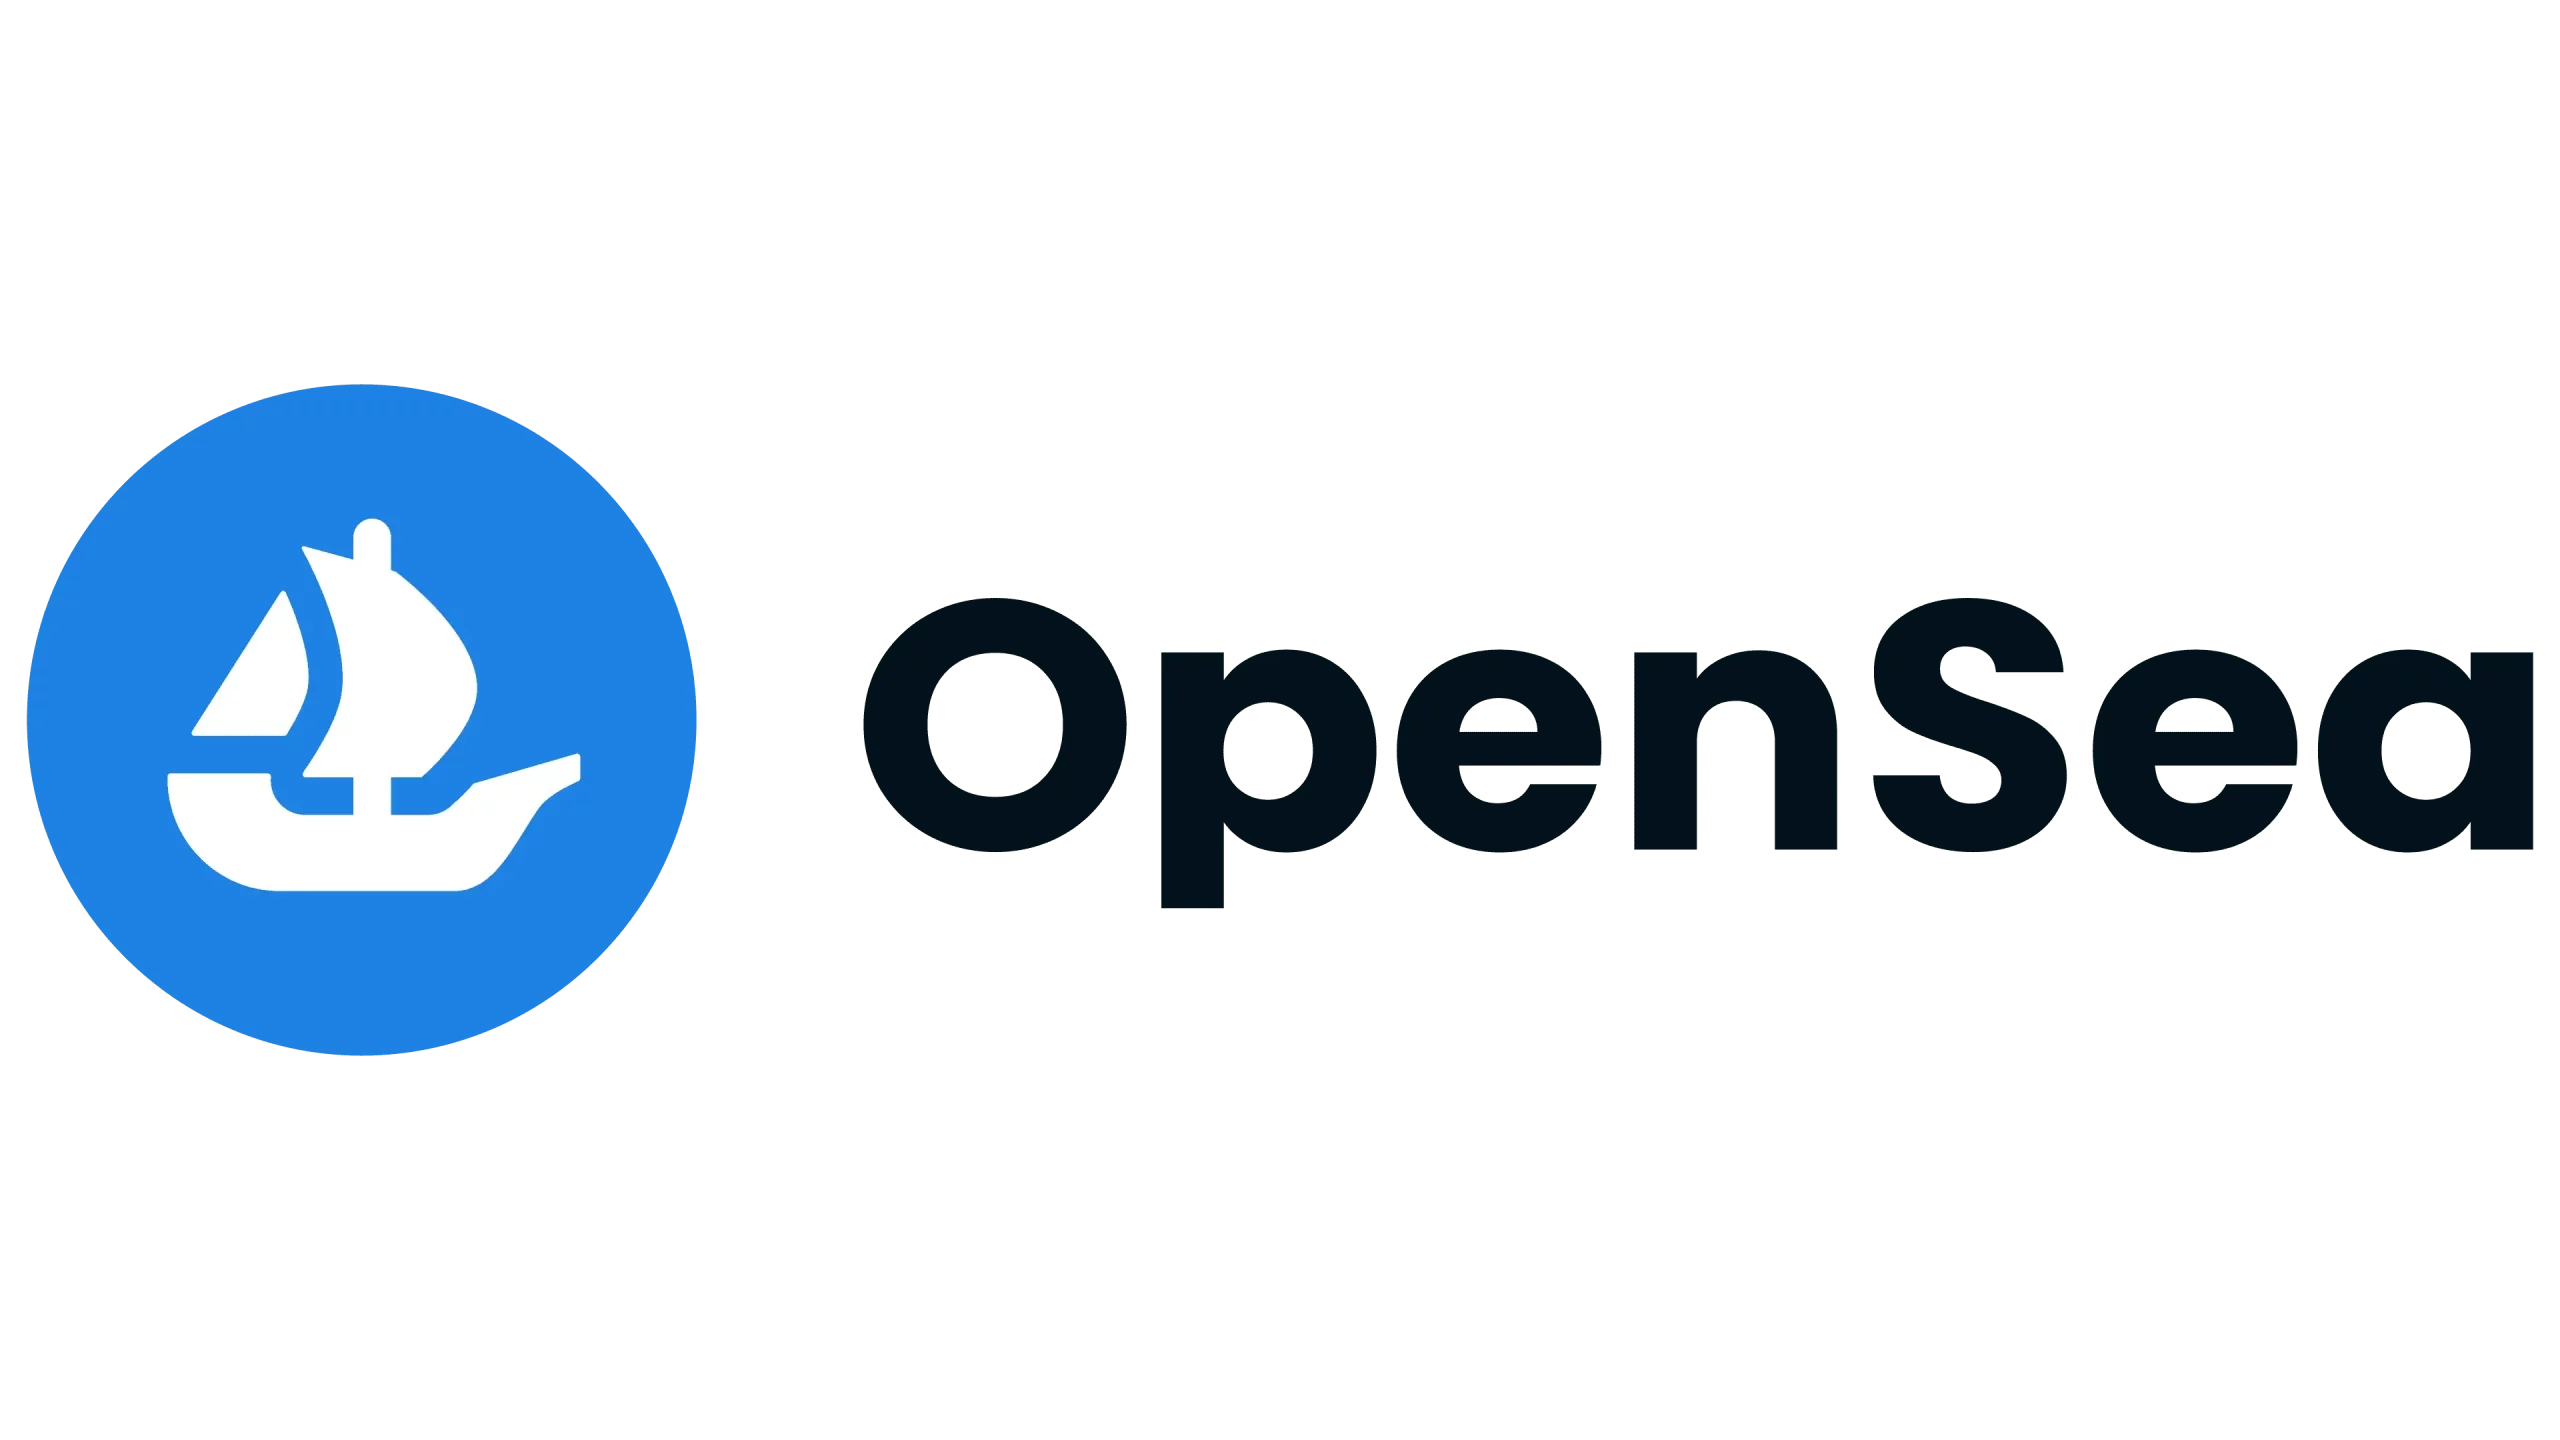 2. NFT Marketplaces - OpenSea